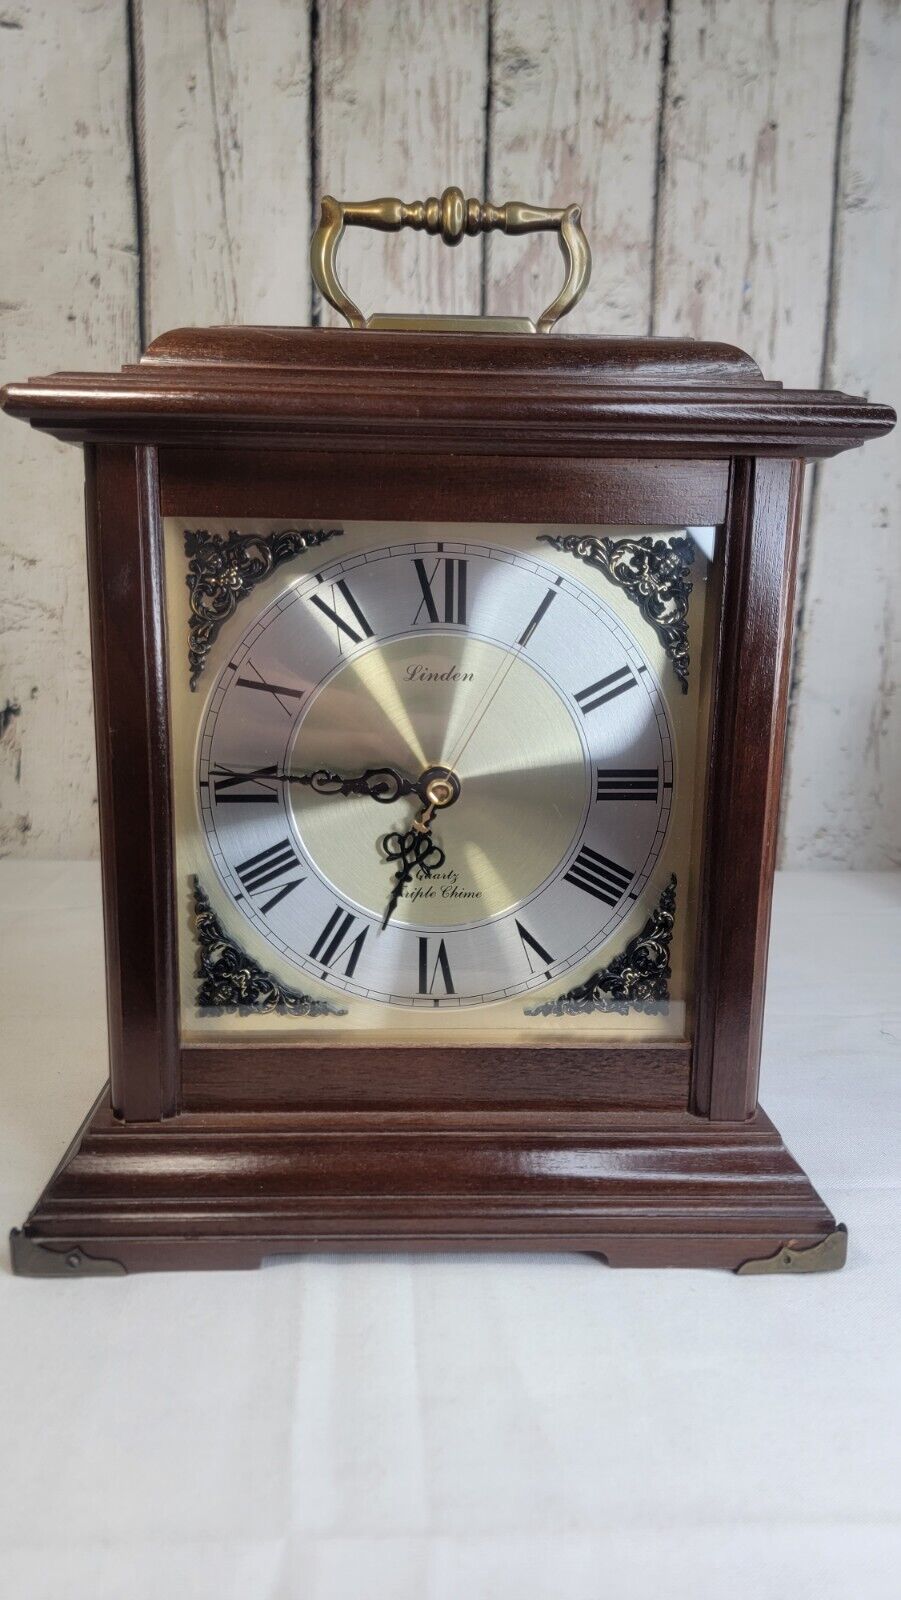 Triple Chime/ Linden Quarts  Mantel Clock. Tested Keeps time (see full details)